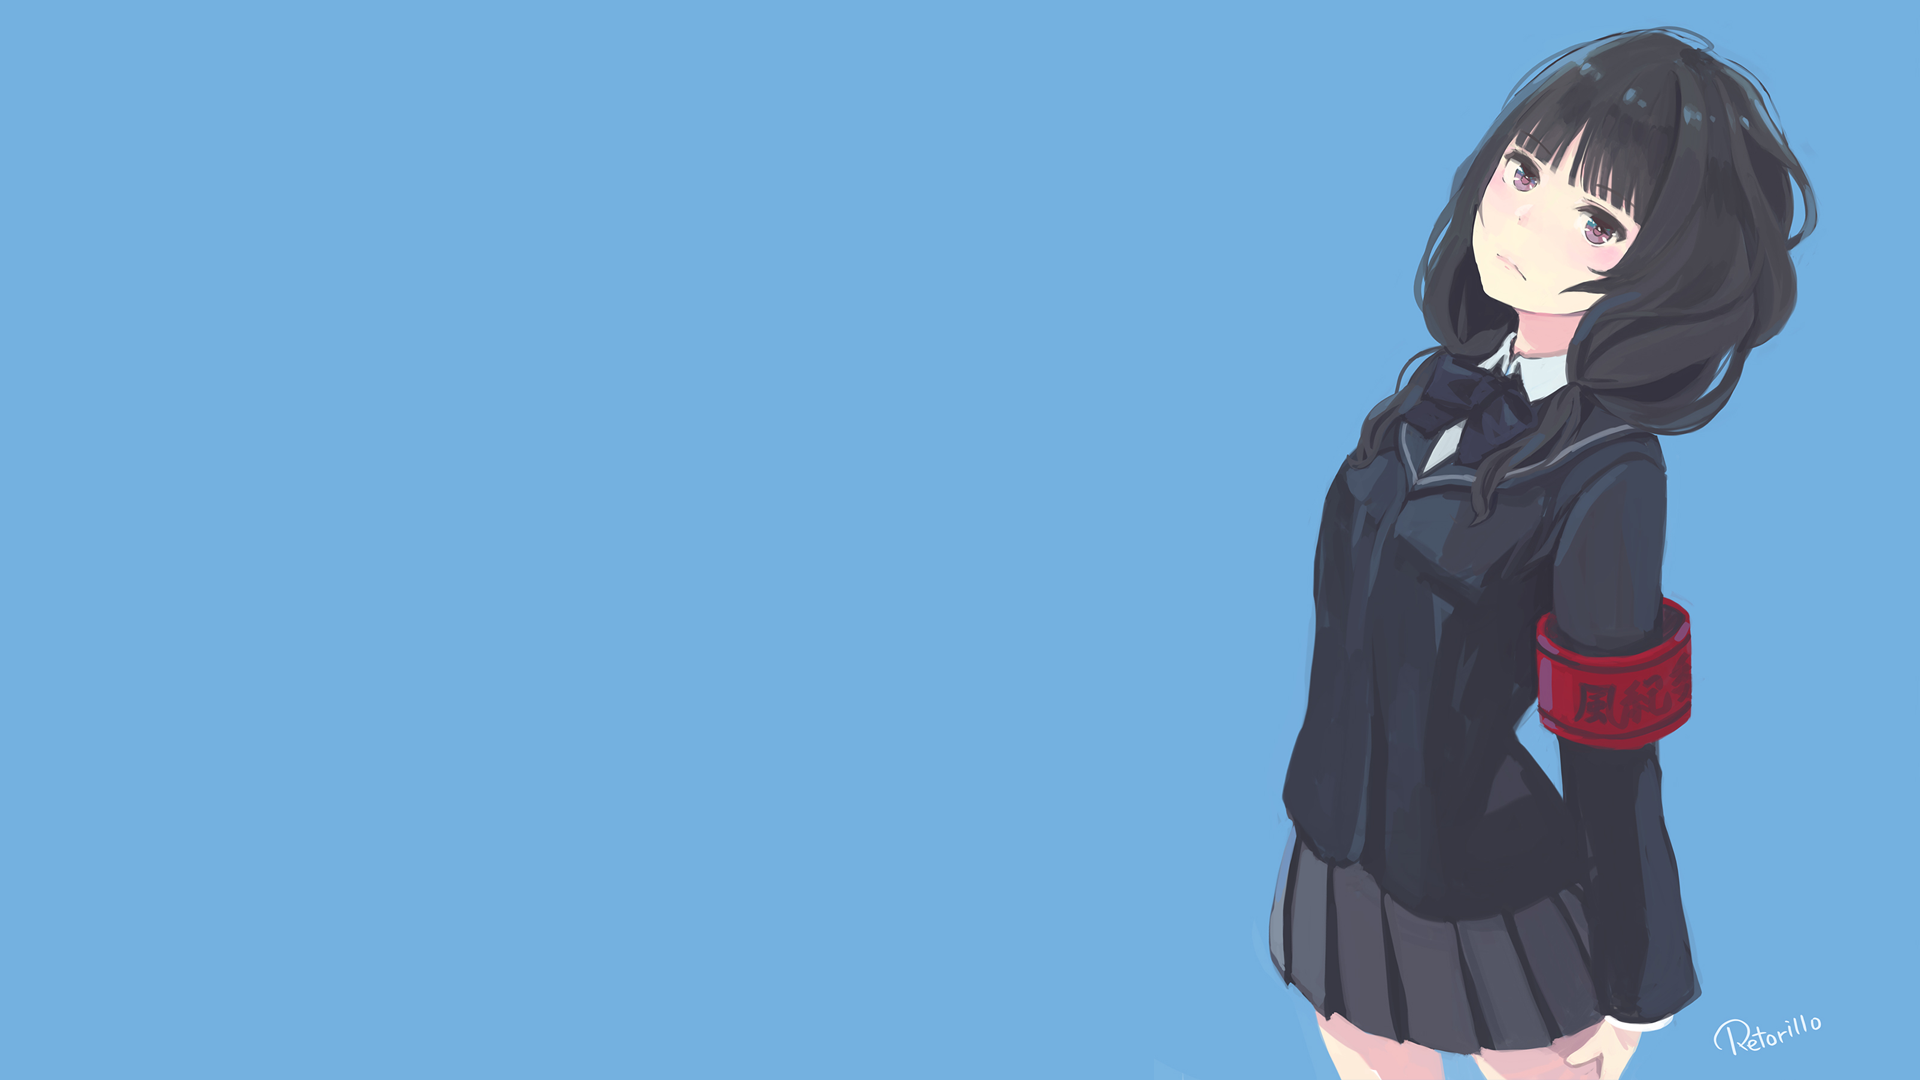 Anime 1920x1080 anime girls blue background anime dark hair simple background miniskirt